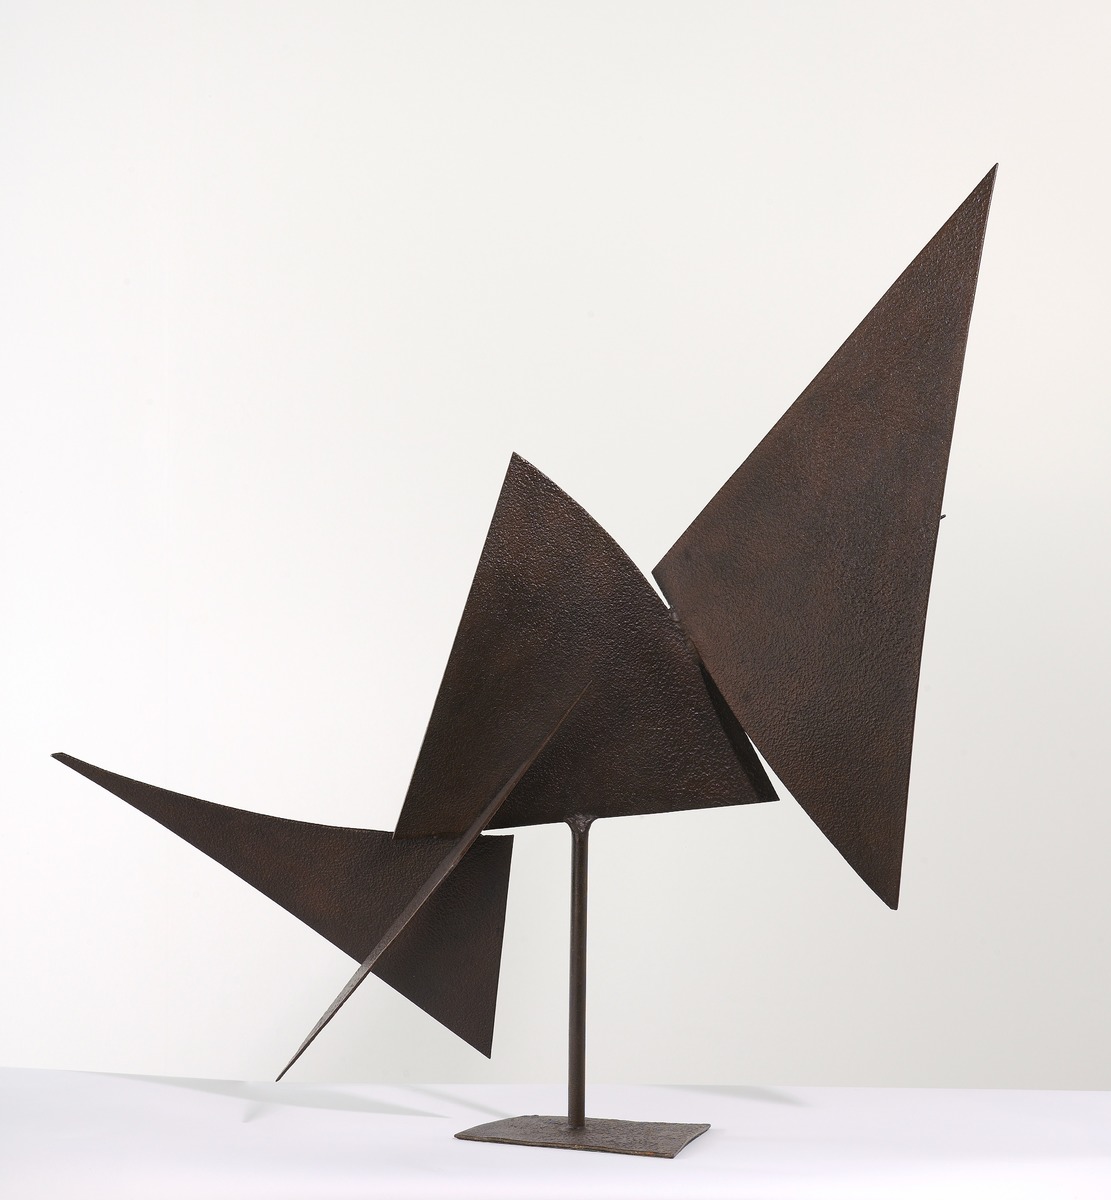 Triangular Forms | Art UK